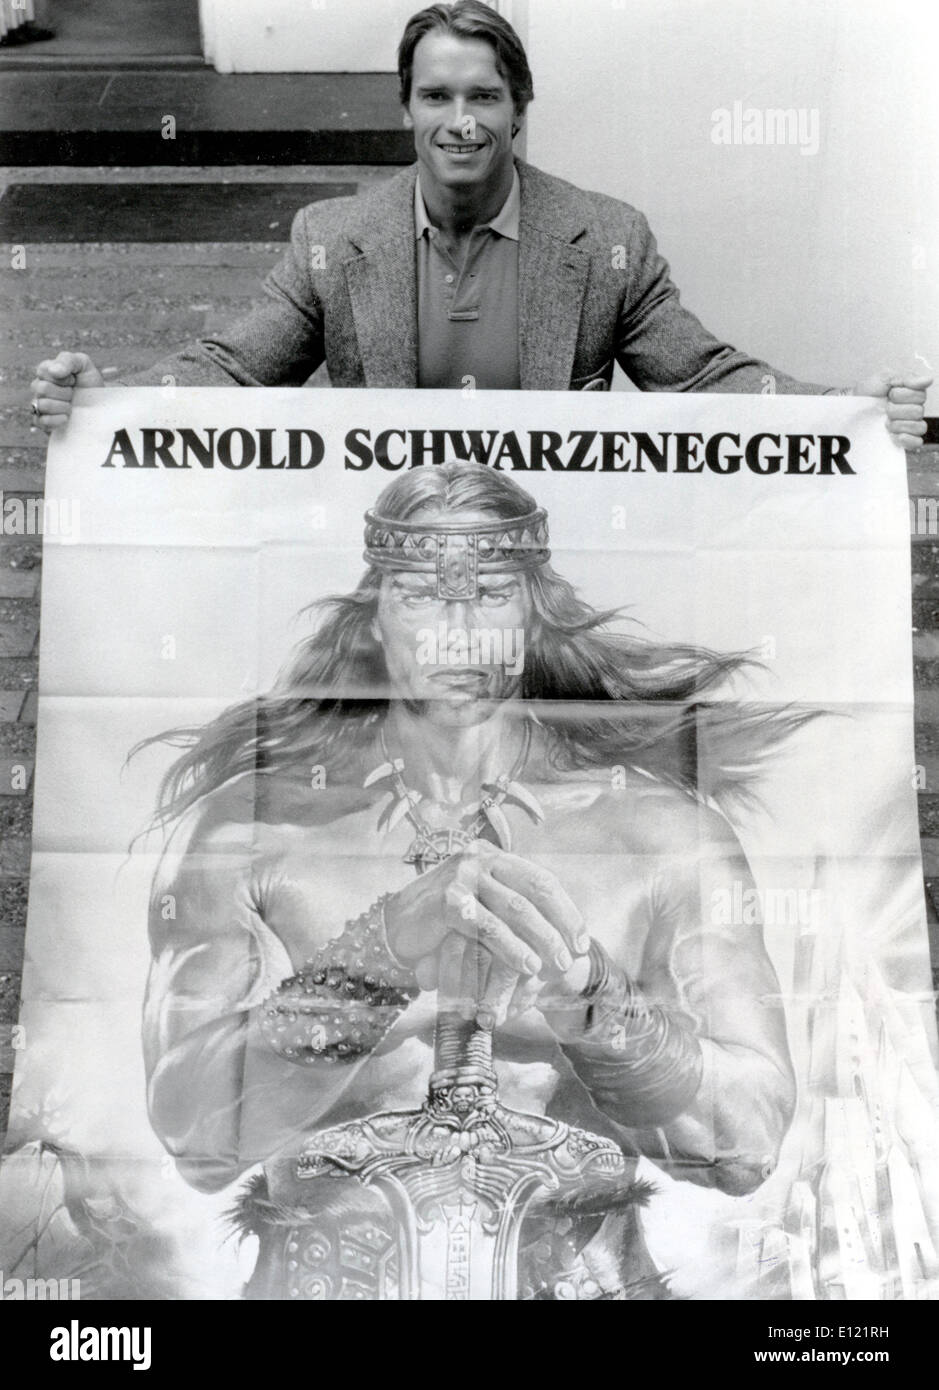 Actor Arnold Schwarzenegger with film poster Stock Photo